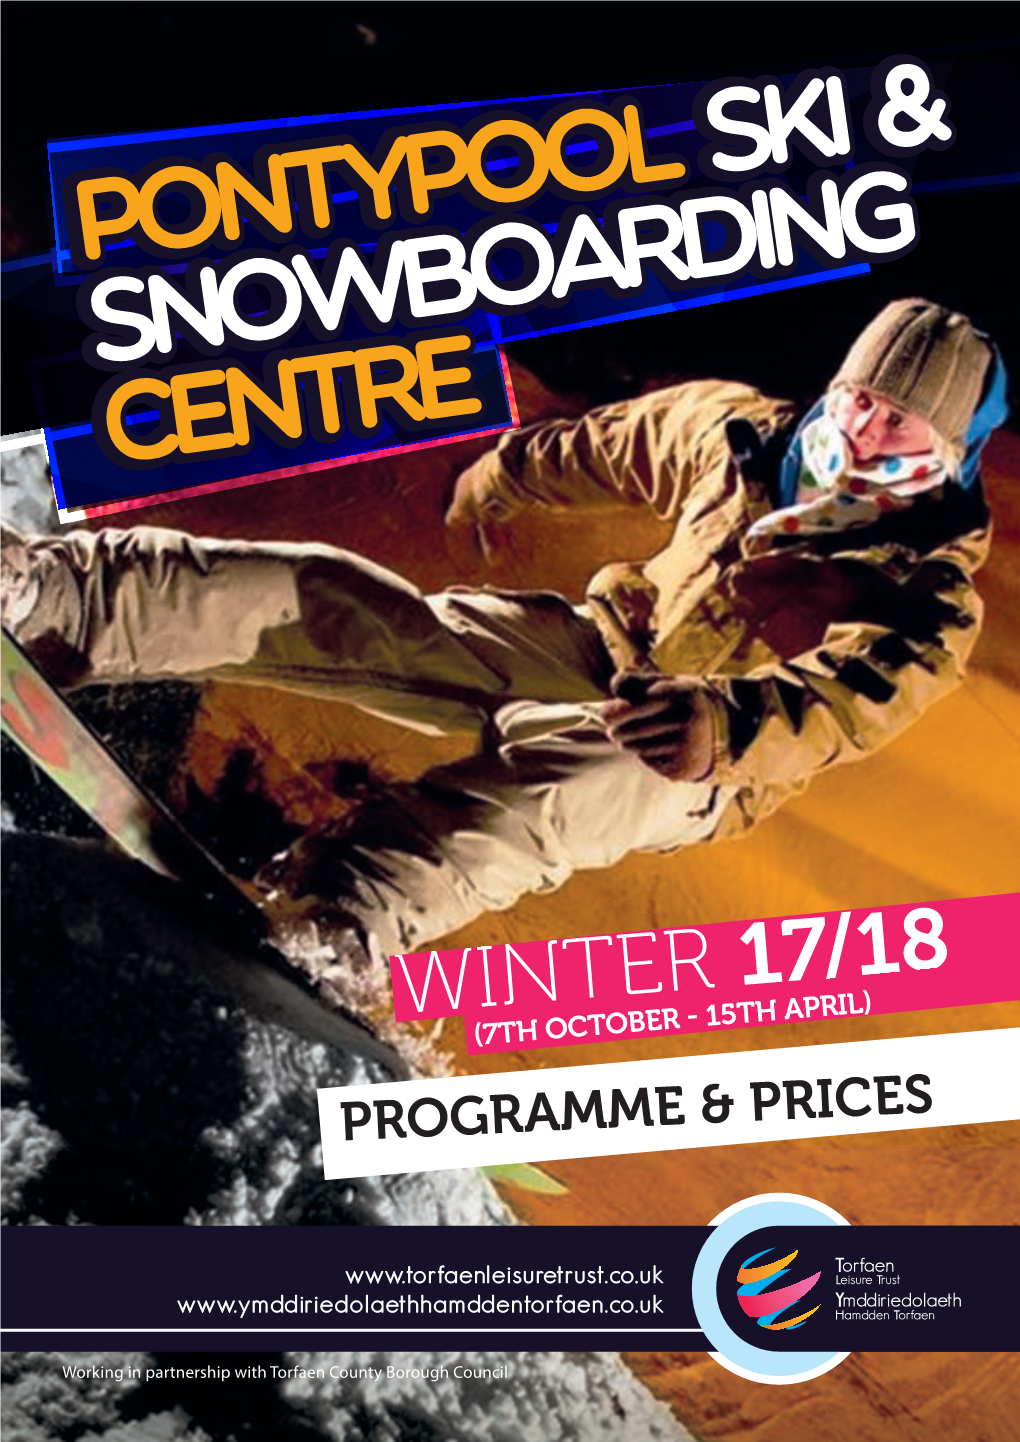 Pontypool Ski & Snowboarding Centre Pontypool Ski & Snowboarding Centre